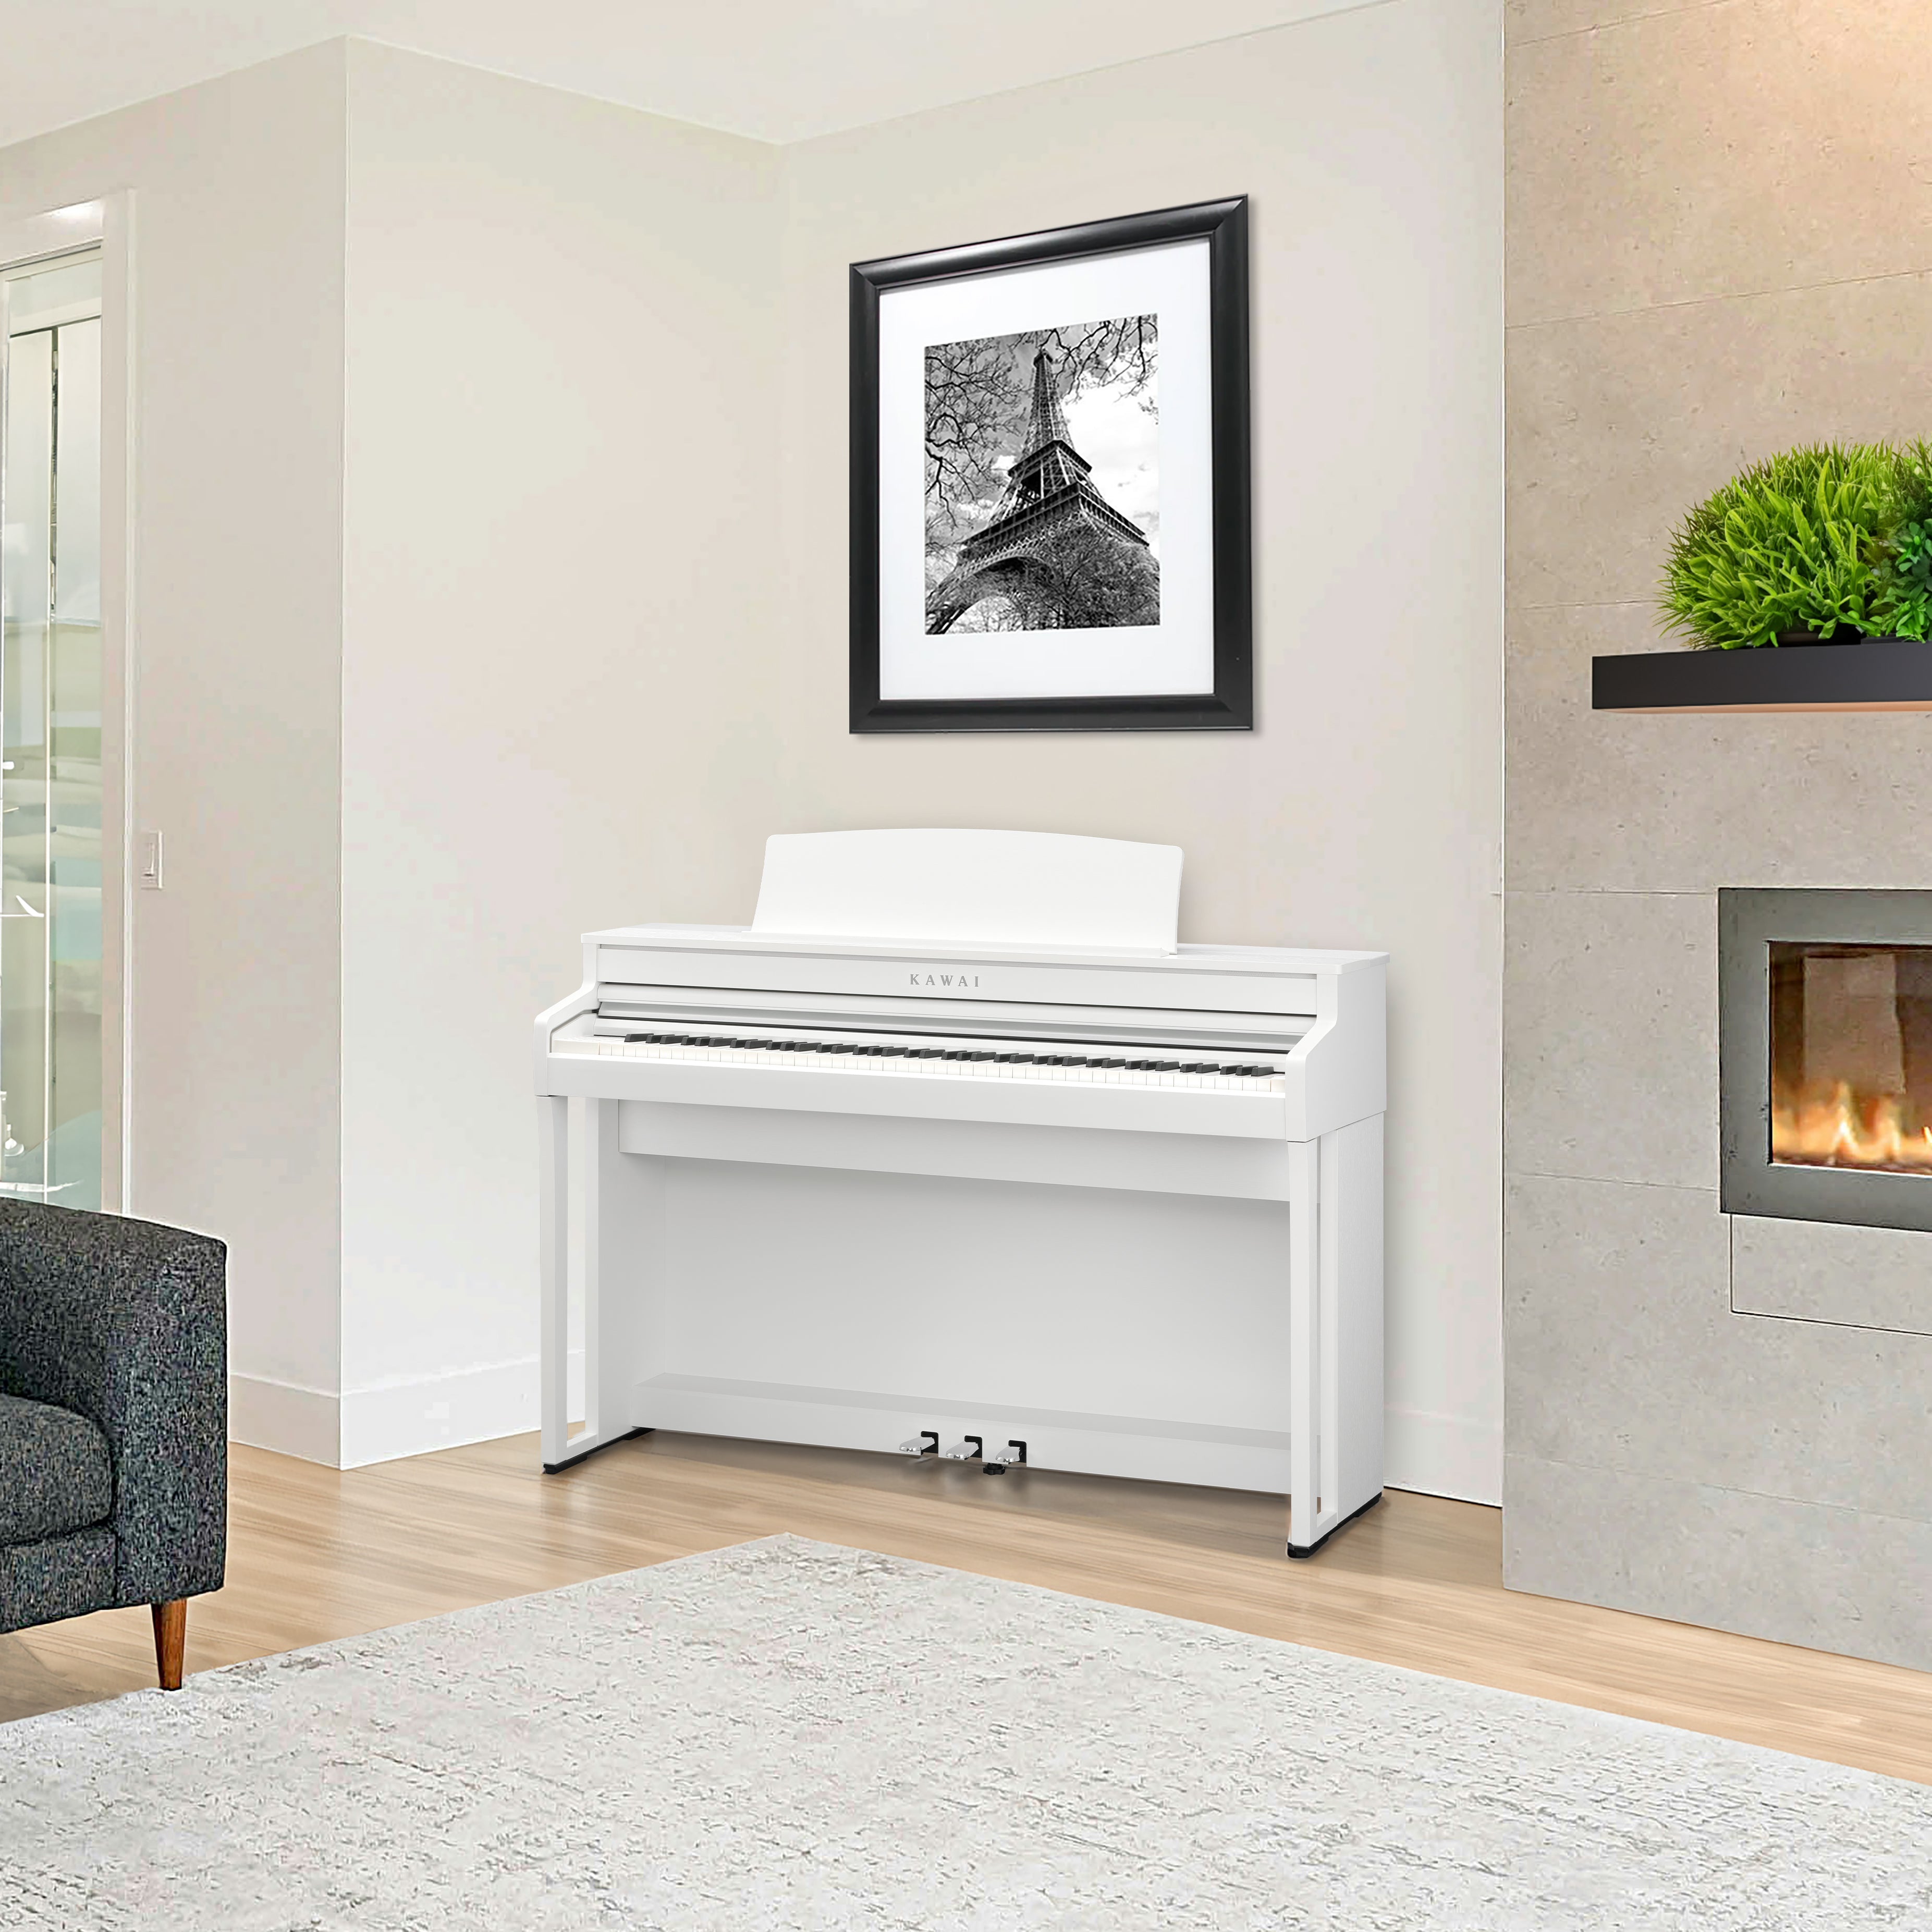 Kawai CA59 Concert Artist Digital Piano - Satin White - in a stylish living room